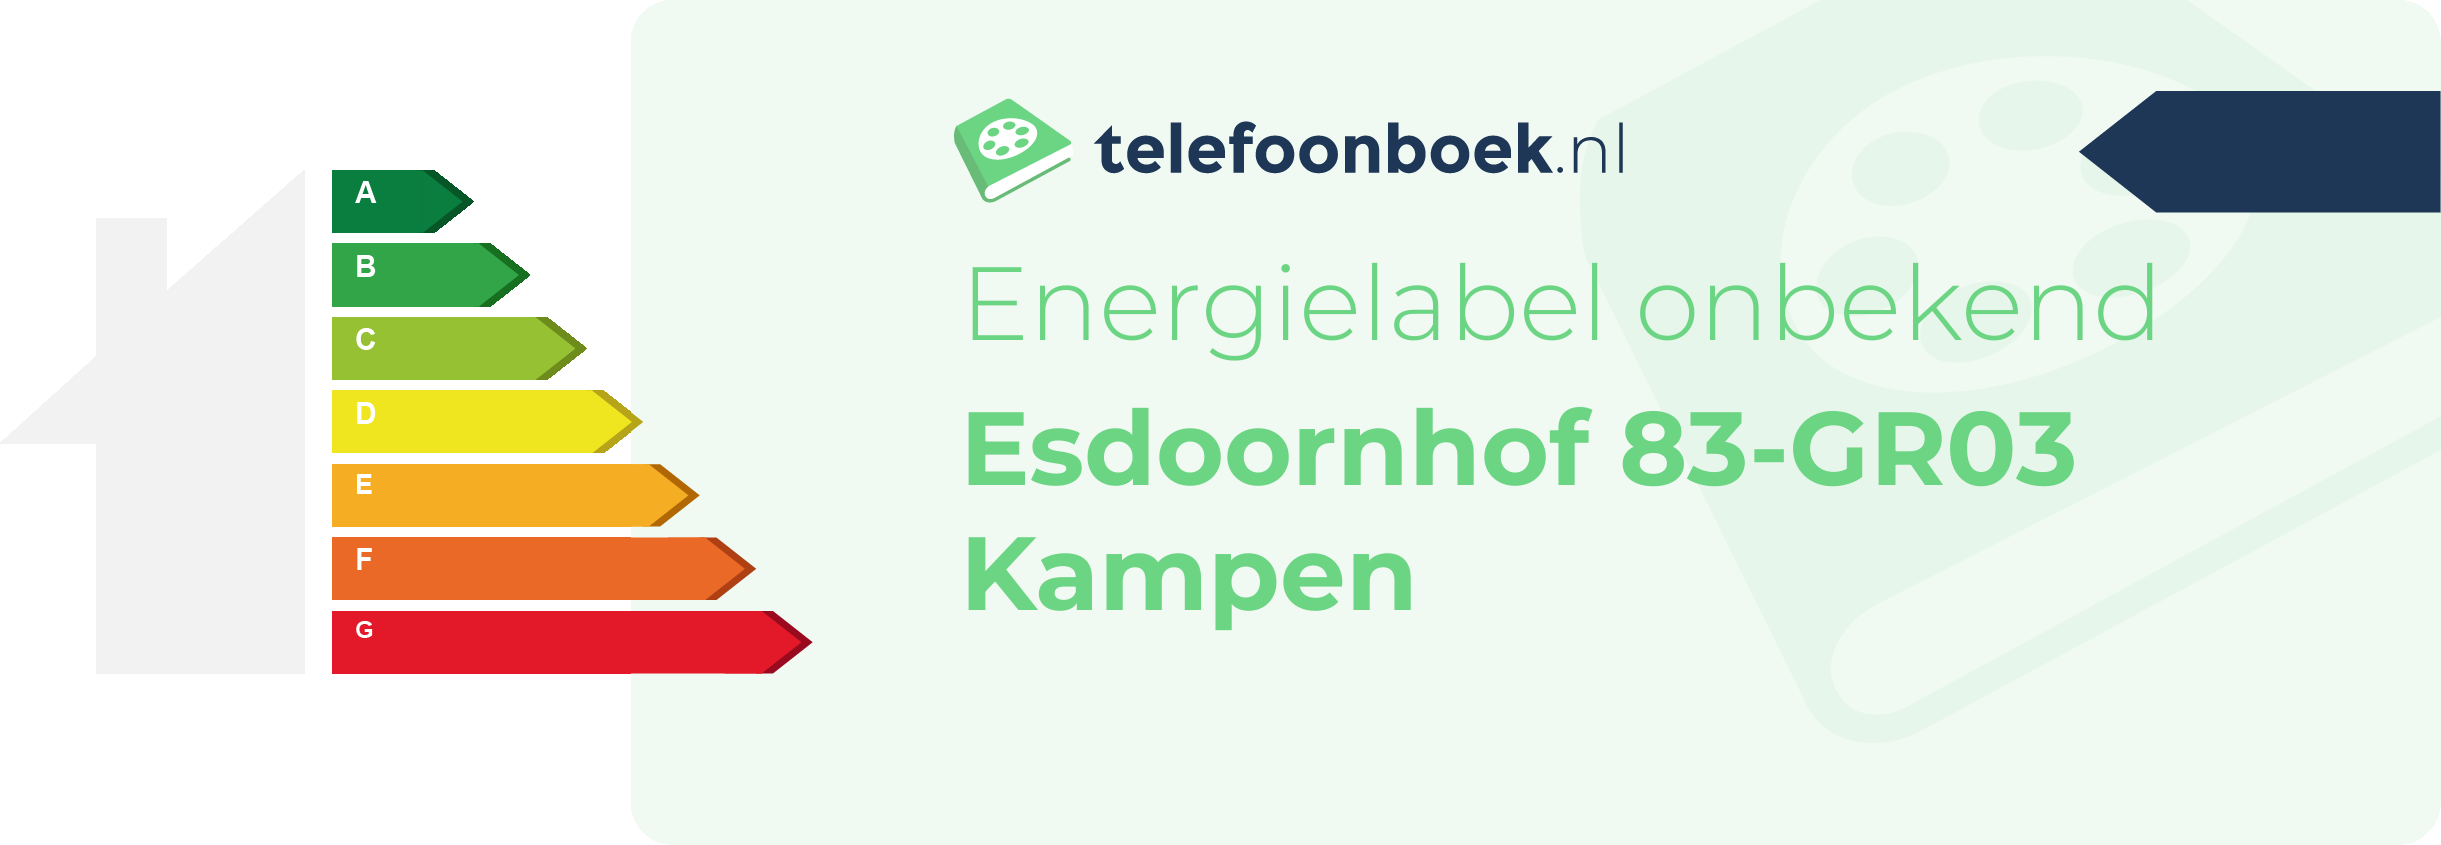 Energielabel Esdoornhof 83-GR03 Kampen